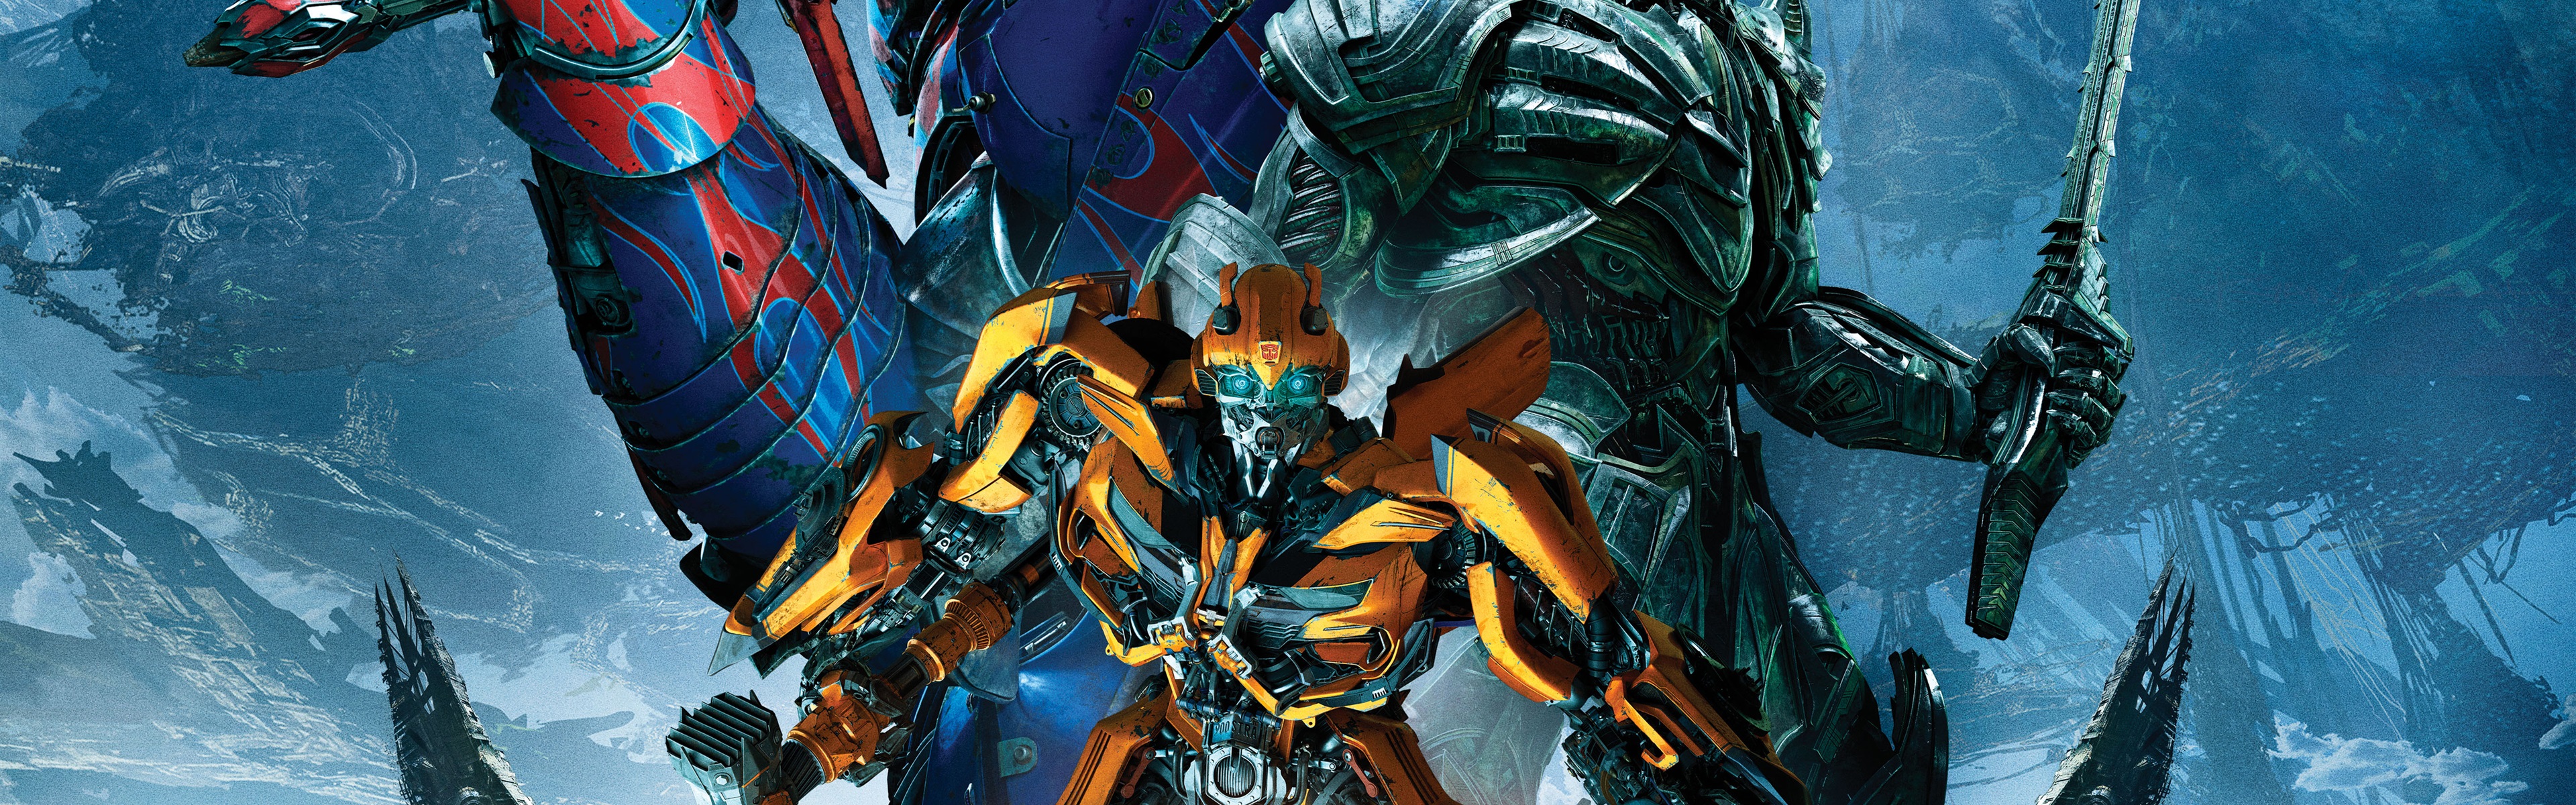 Wallpaper Bumblebee, Transformers - Transformers The Last Knight Movie - HD Wallpaper 